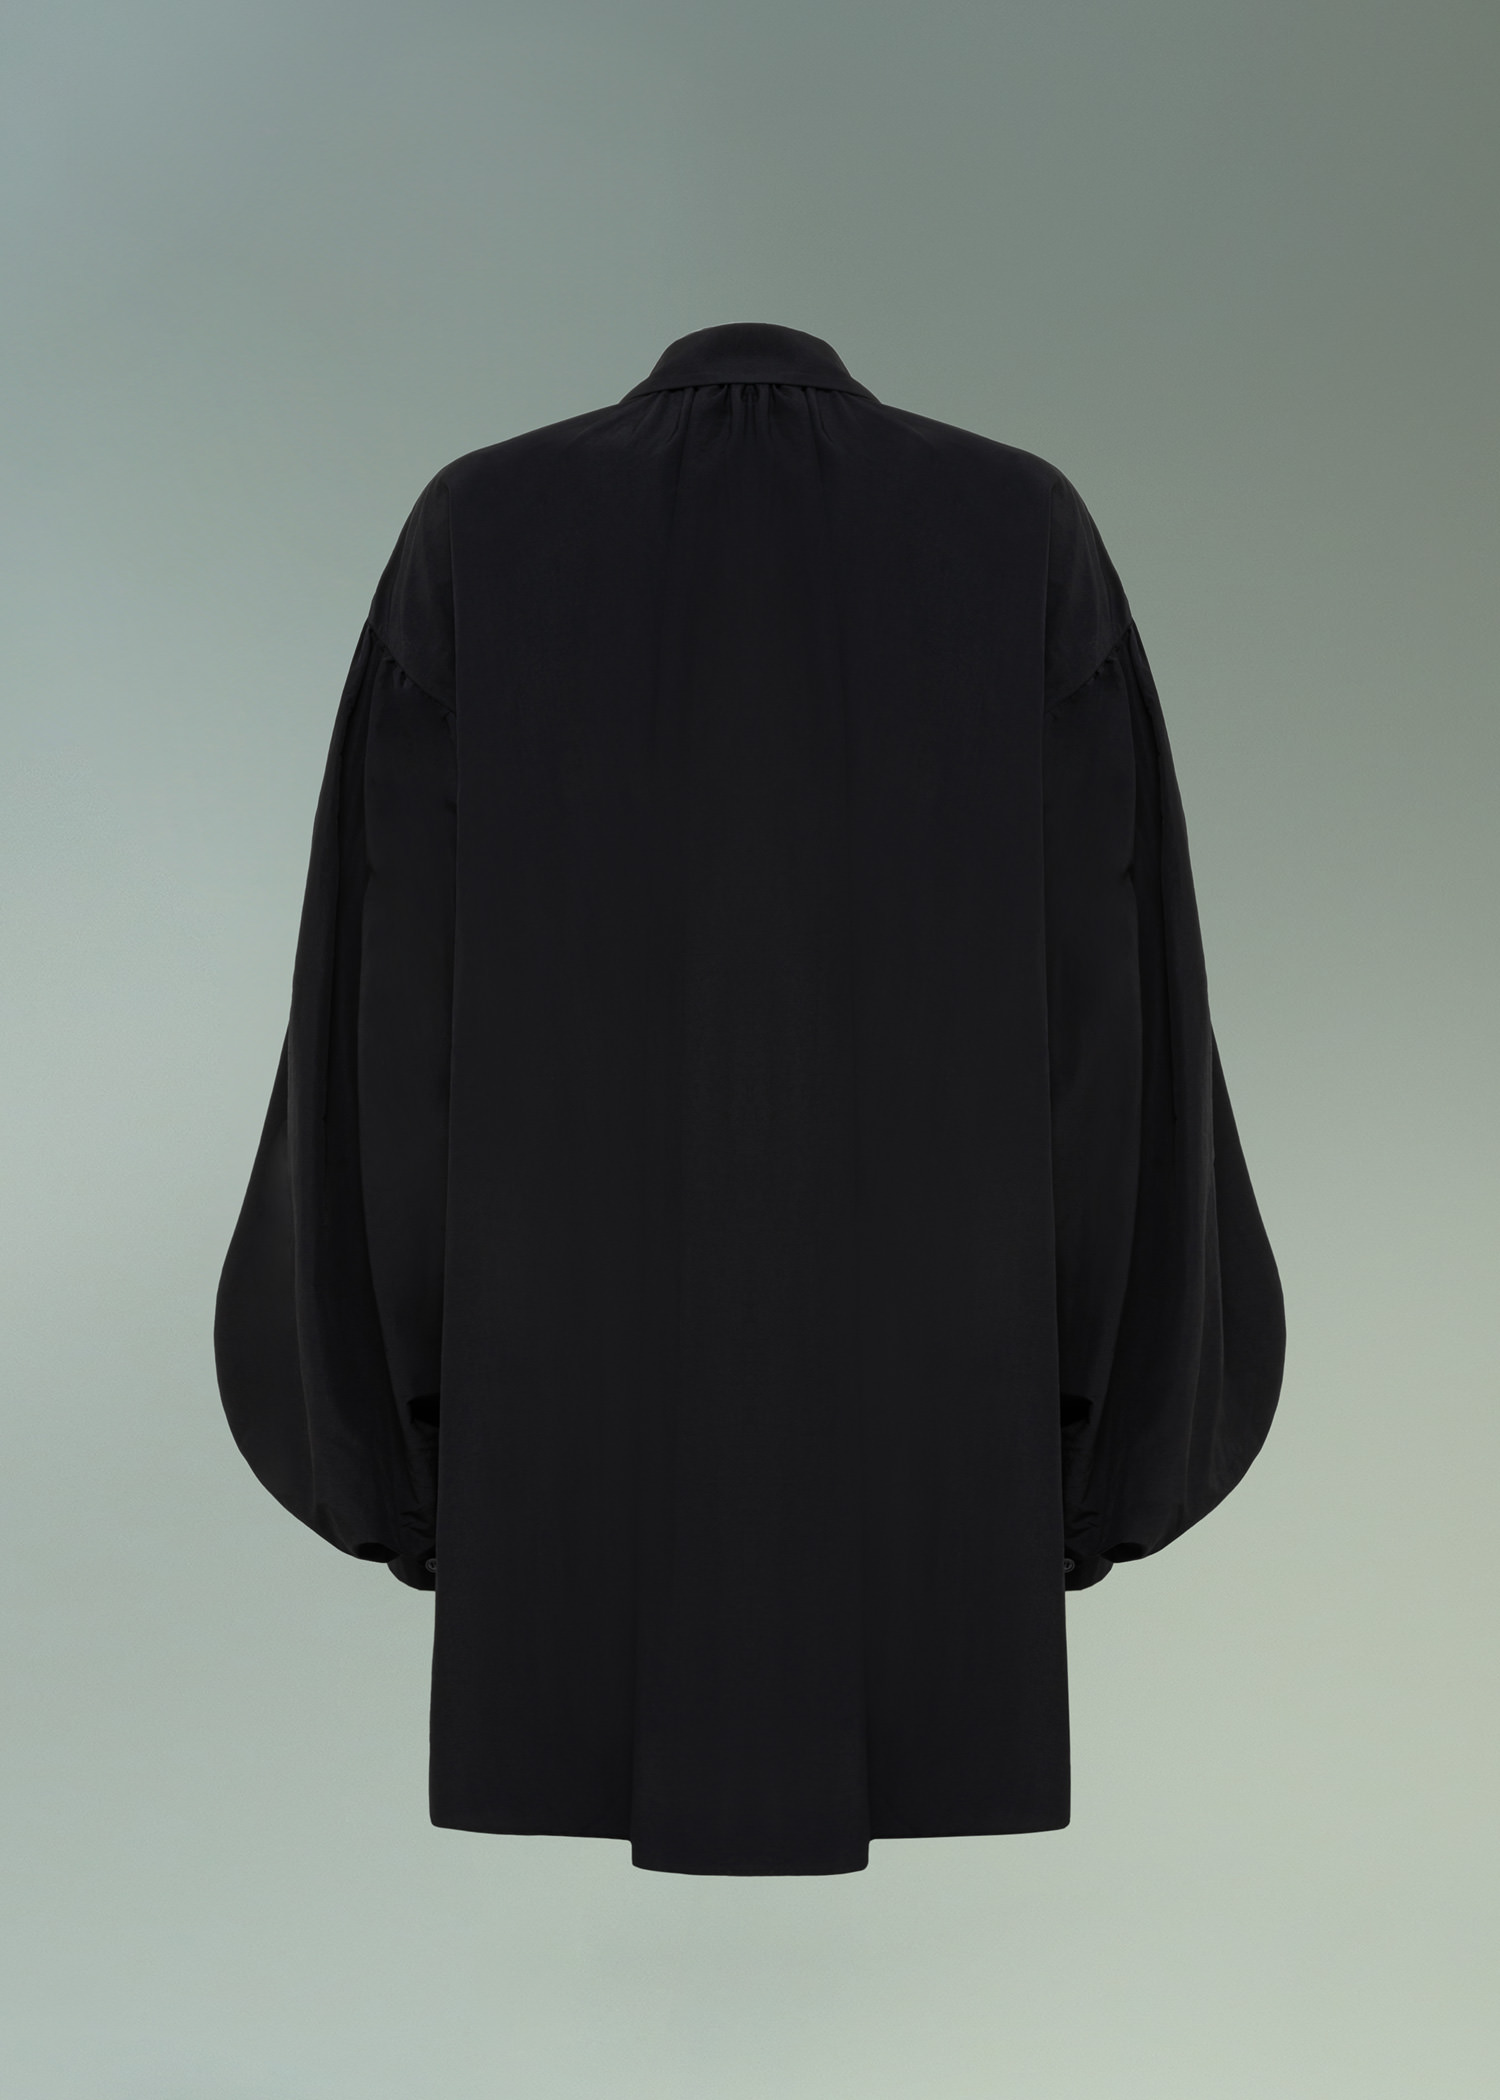 DEL CORE: BALLOON SLEEVE SHIRT DRESS WITH DRAWSTRING WAIST